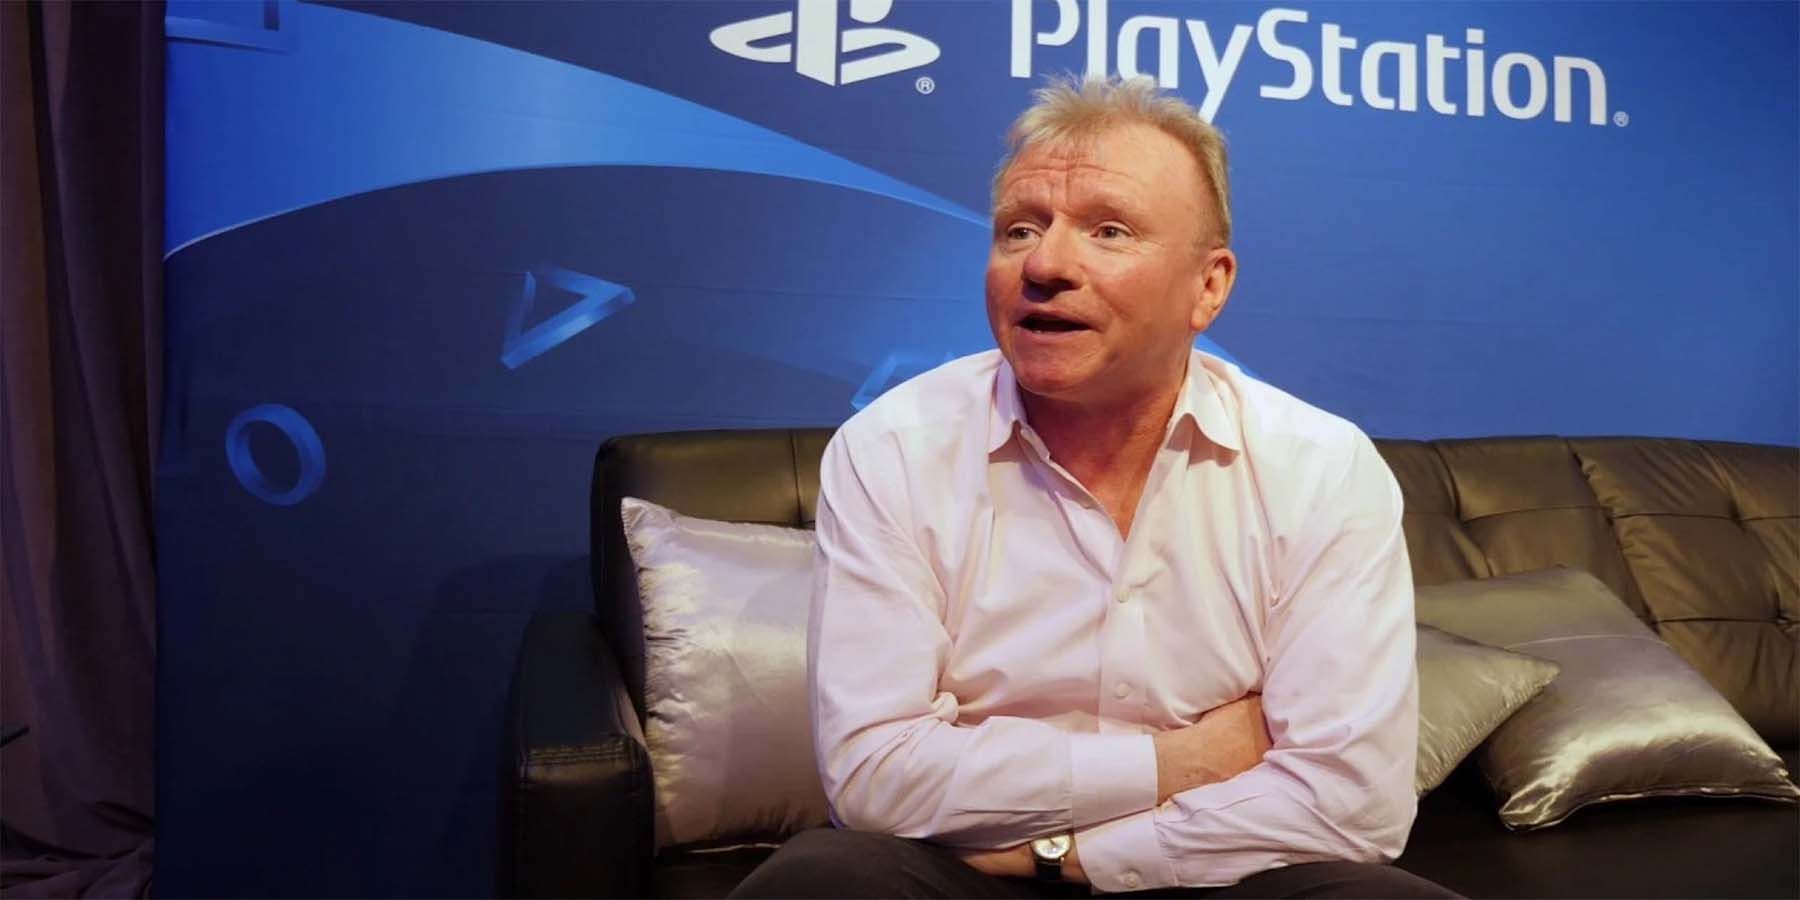 PlayStation’s Jim Ryan Slated განიხილოს სათამაშო წარსული და მომავალი Fireeside სტატისტიკა